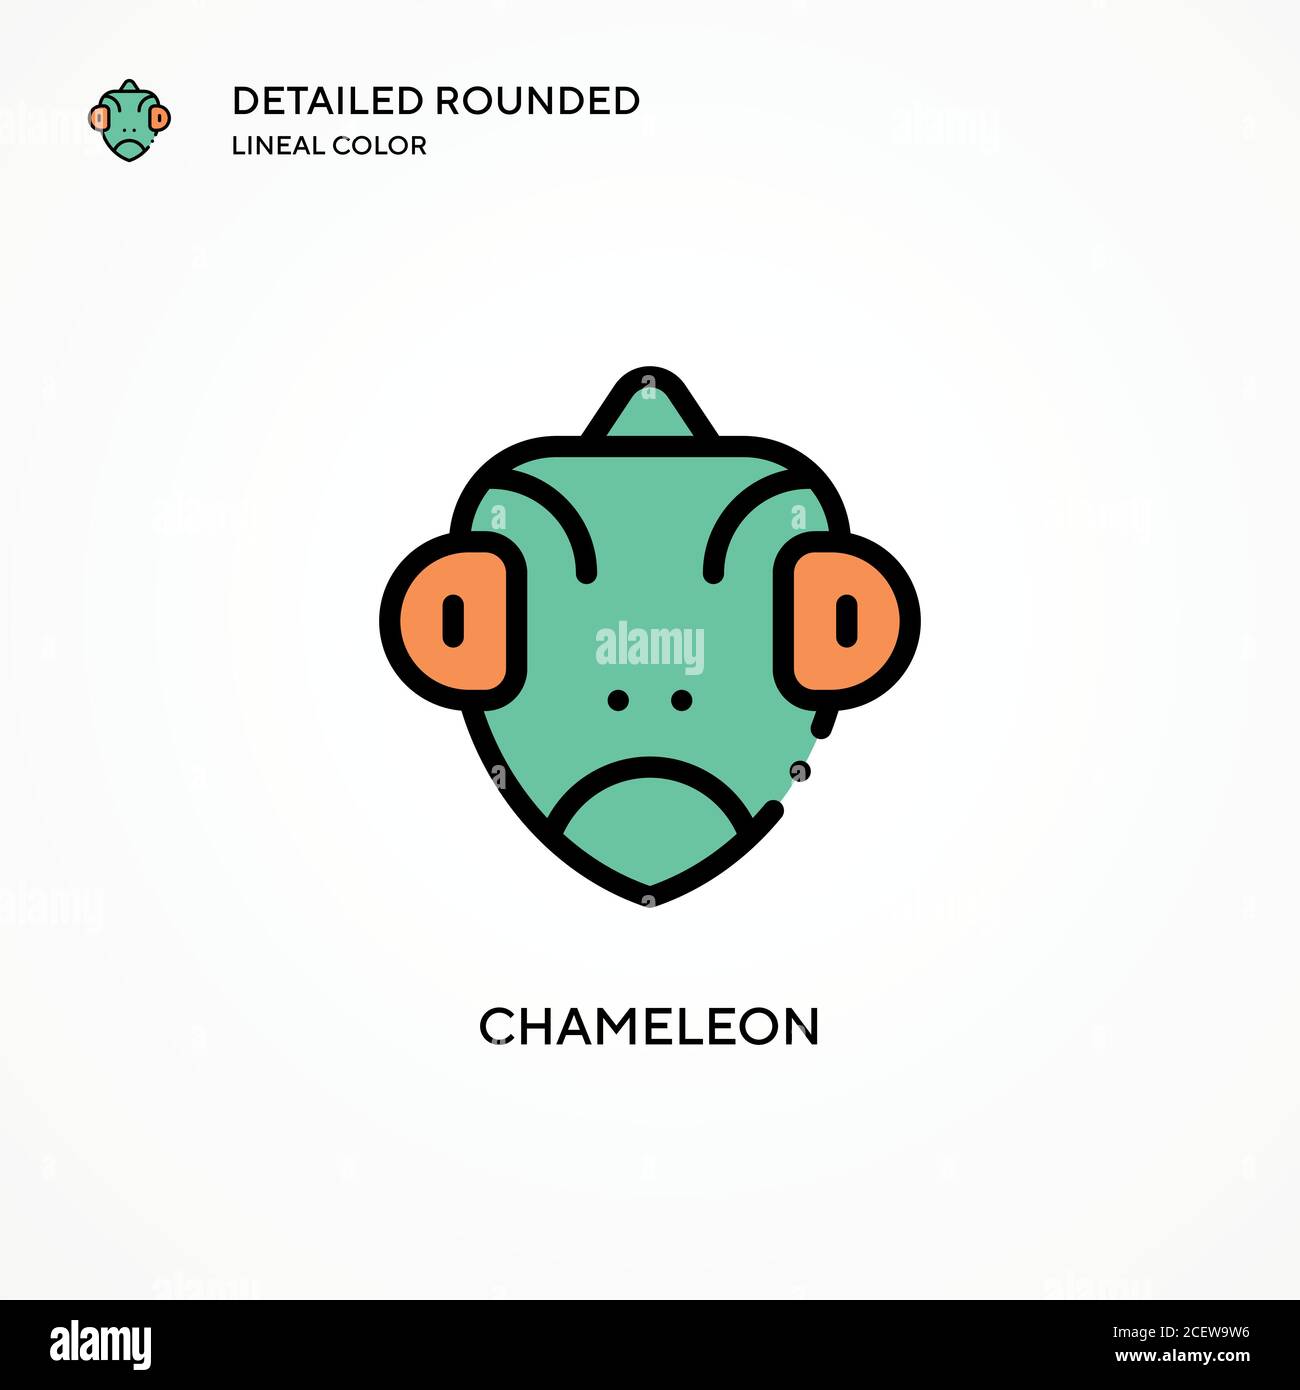 Chameleon-Vektor-Symbol. Moderne Vektorgrafik Konzepte. Einfach zu bearbeiten und anzupassen. Stock Vektor